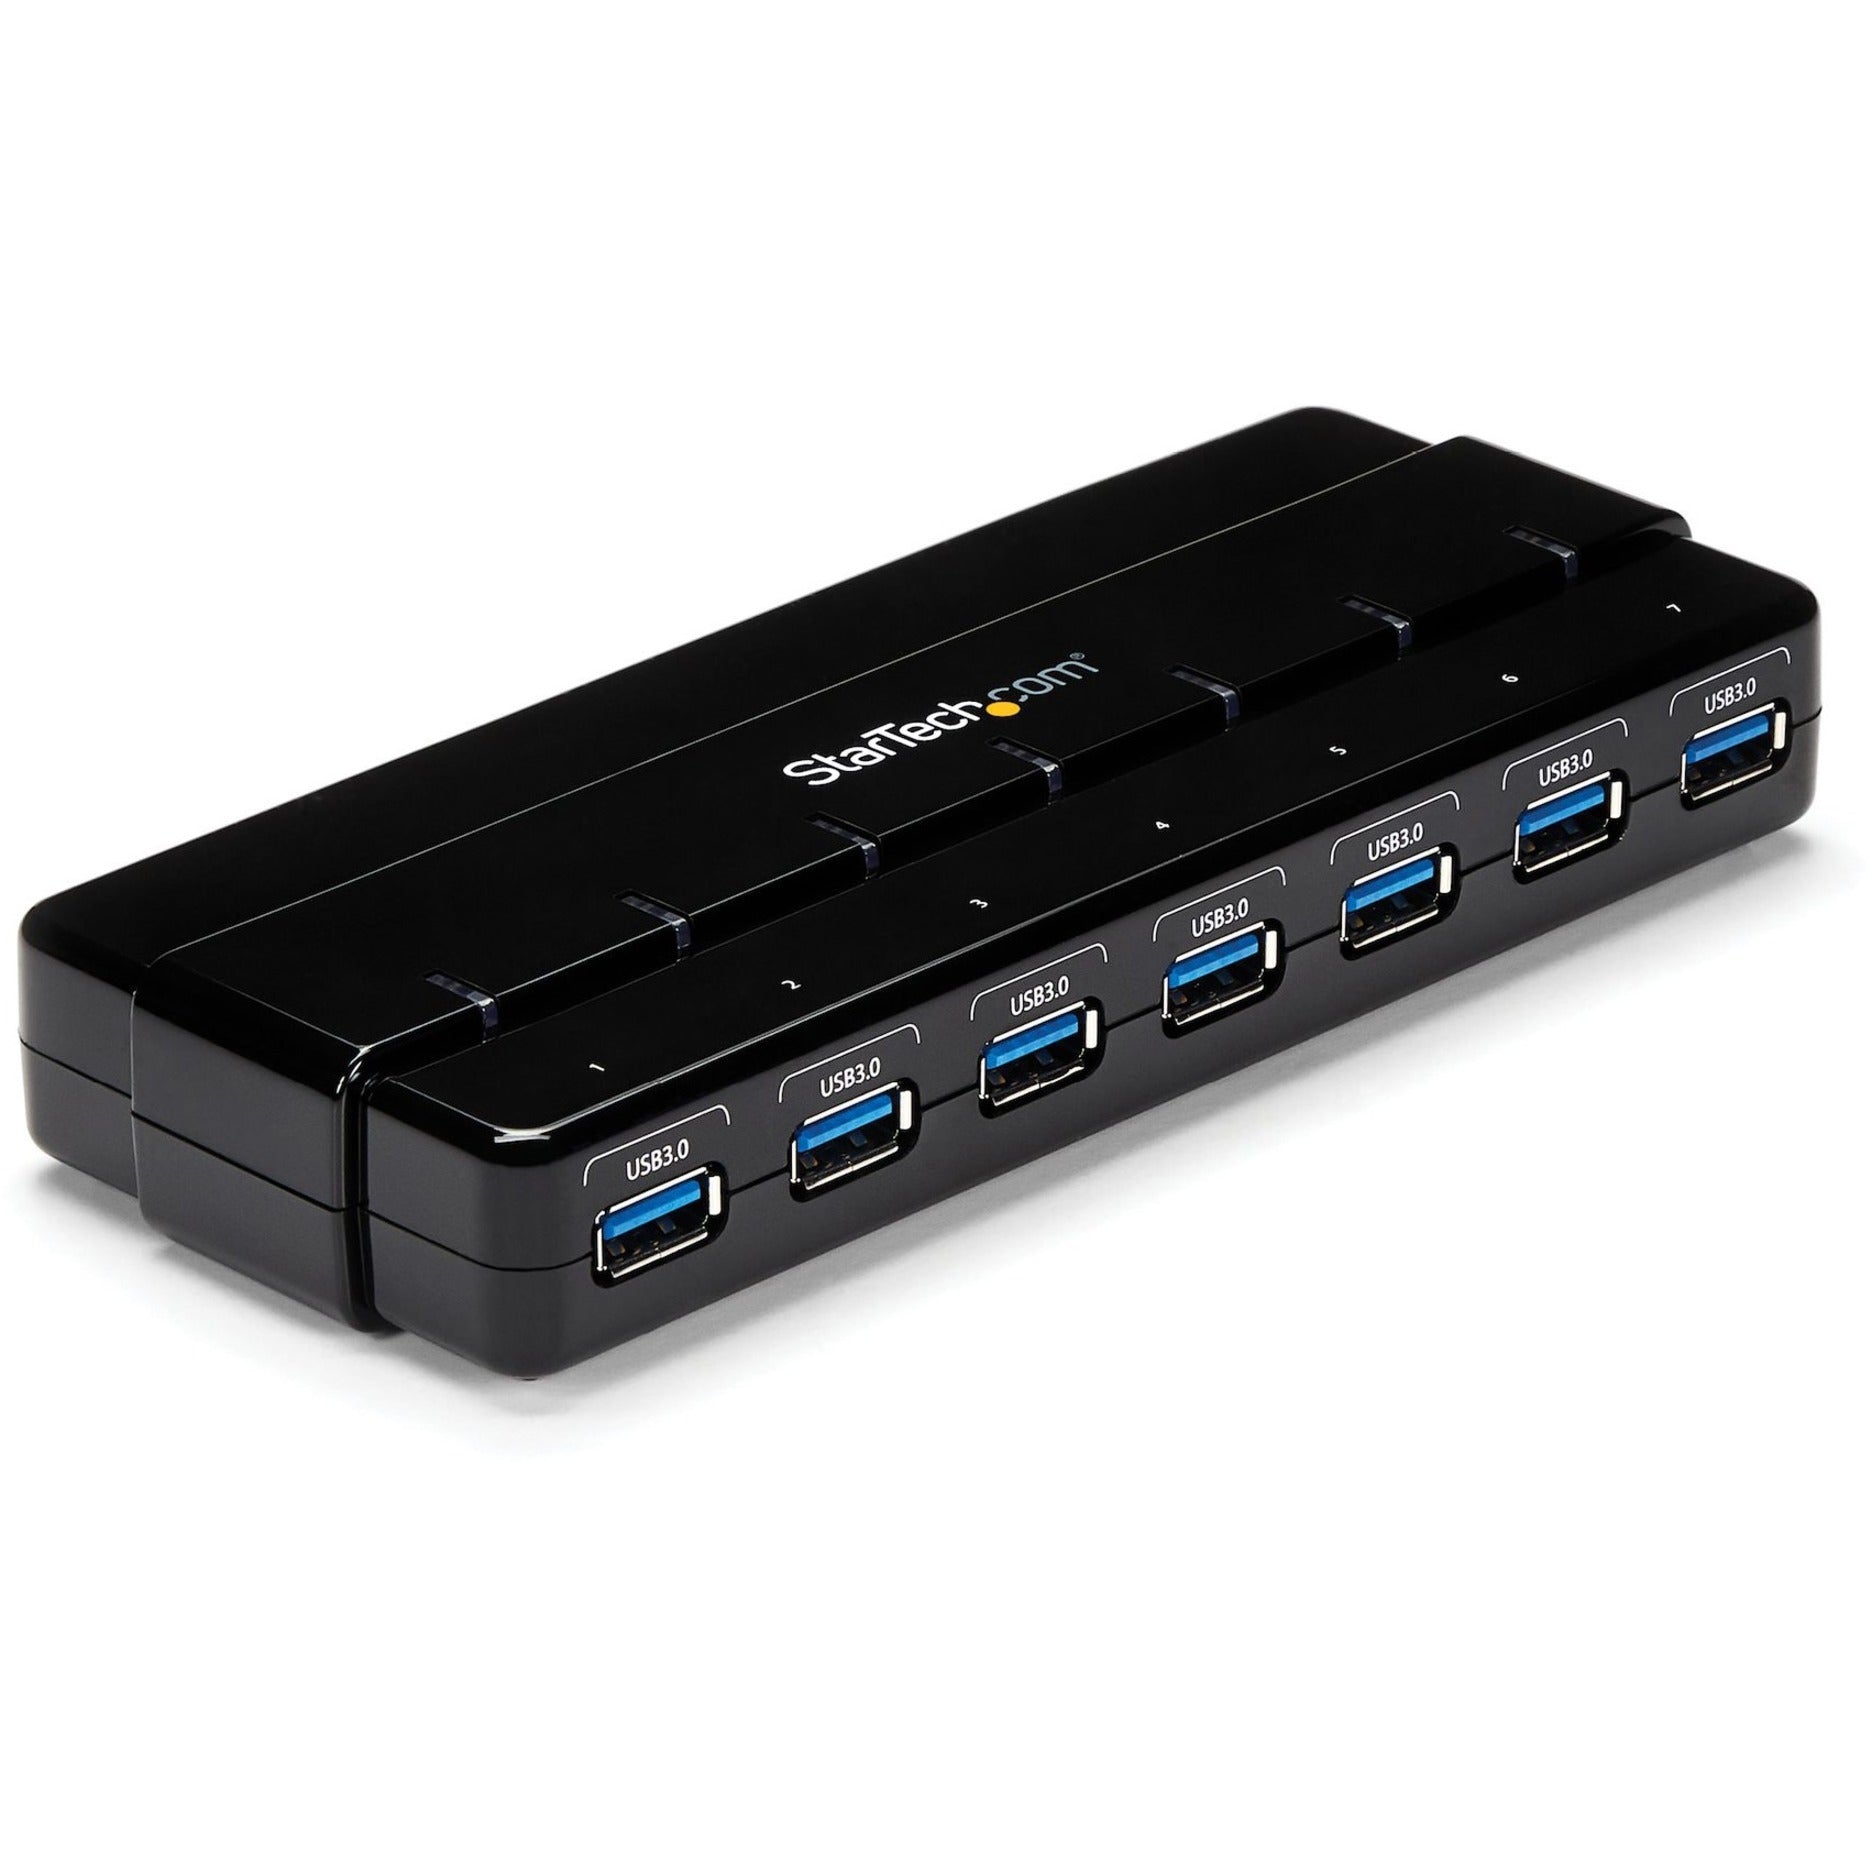 StarTech.com ST7300USB3B 7 Port SuperSpeed USB 3.0 Hub - Desktop USB Hub with Power Adapter, Black